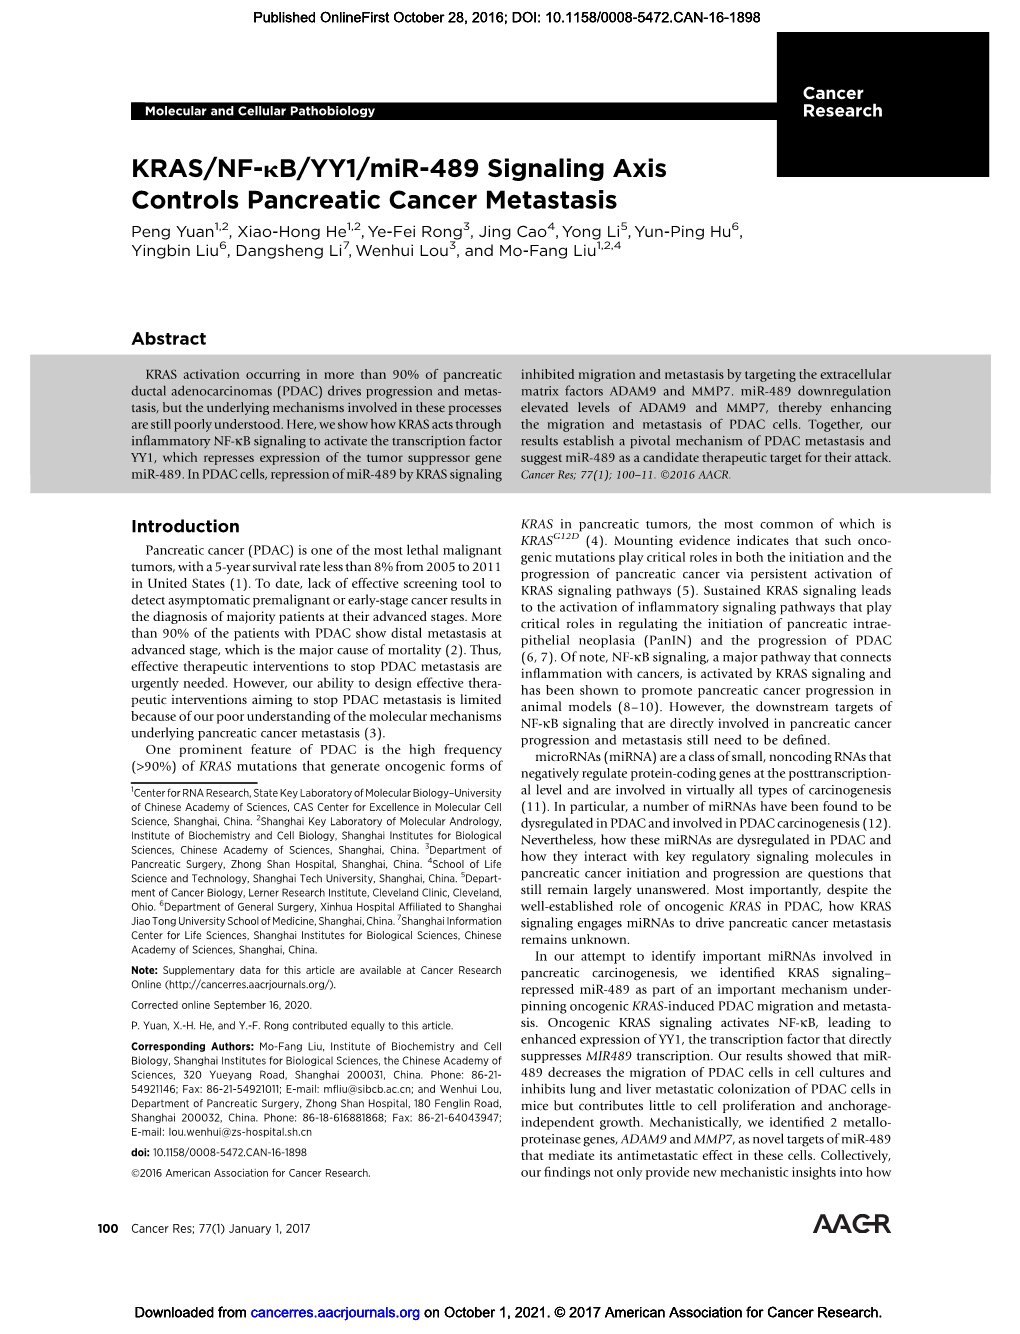 KRAS/NF-Kb/YY1/Mir-489 Signaling Axis Controls Pancreatic Cancer